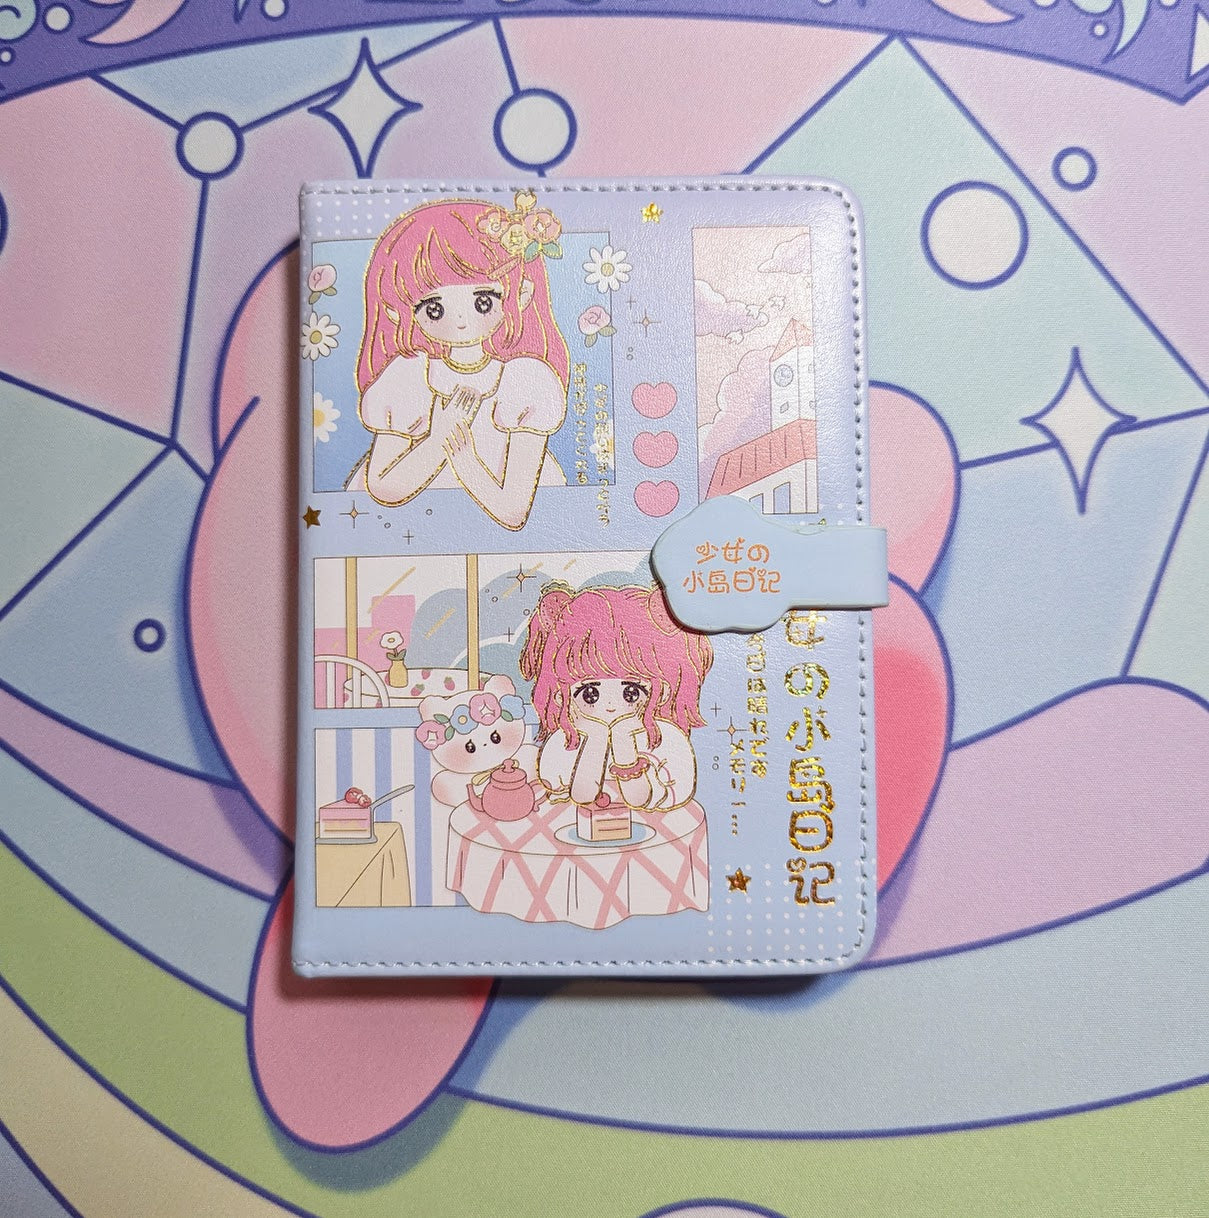 Kawaii Anime Journals - Pink, Yellow, Mint Green and Blue